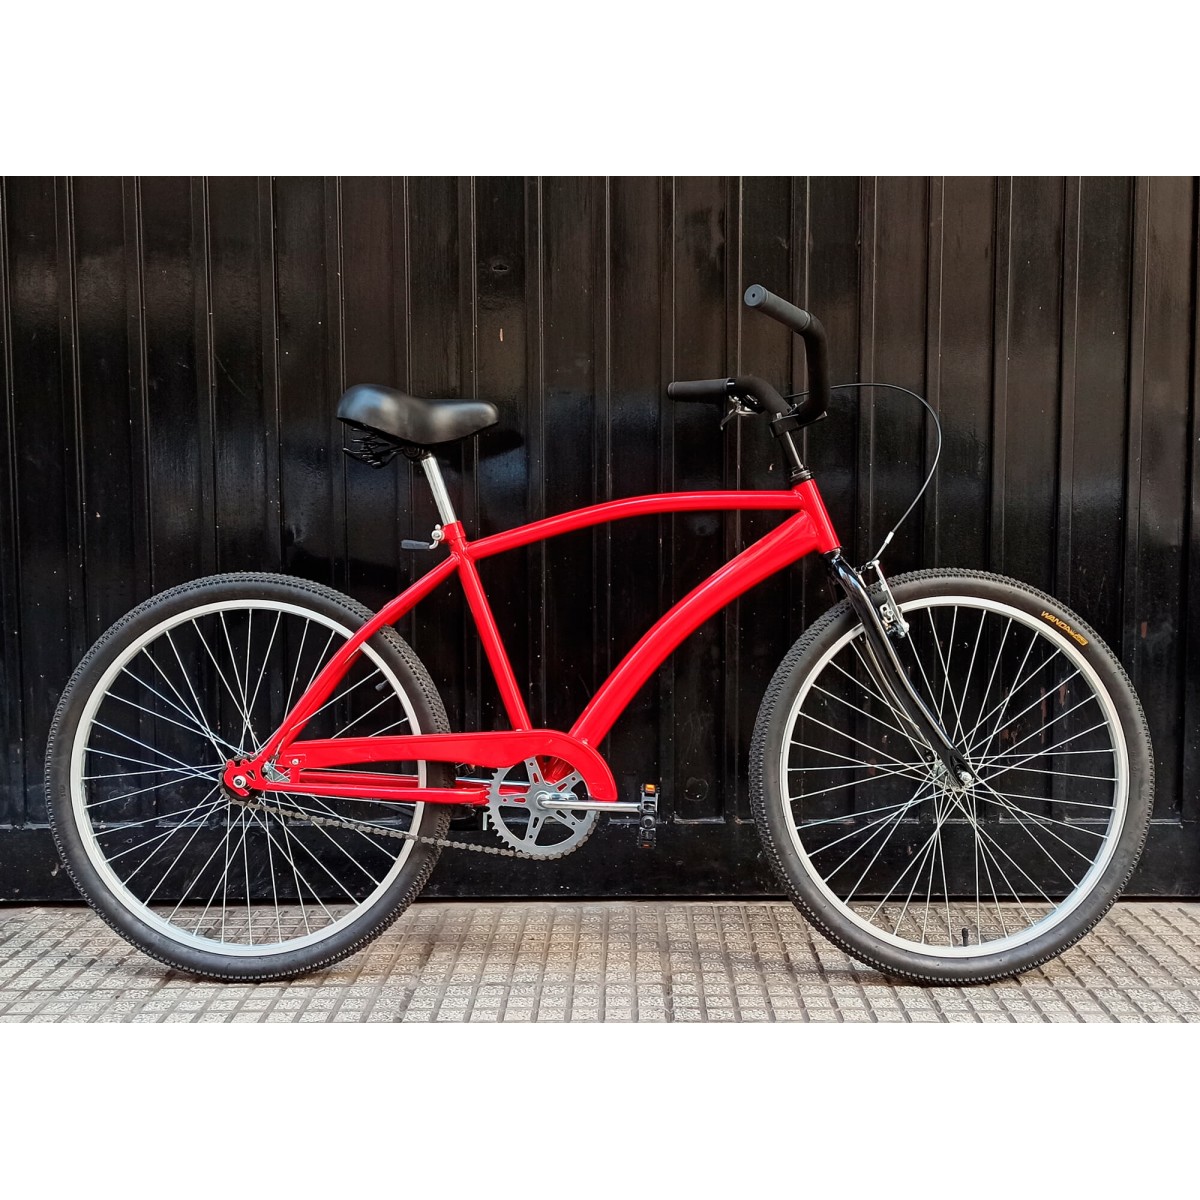 Bicicleta Playera Contrapedal y Freno - Bici Urbana